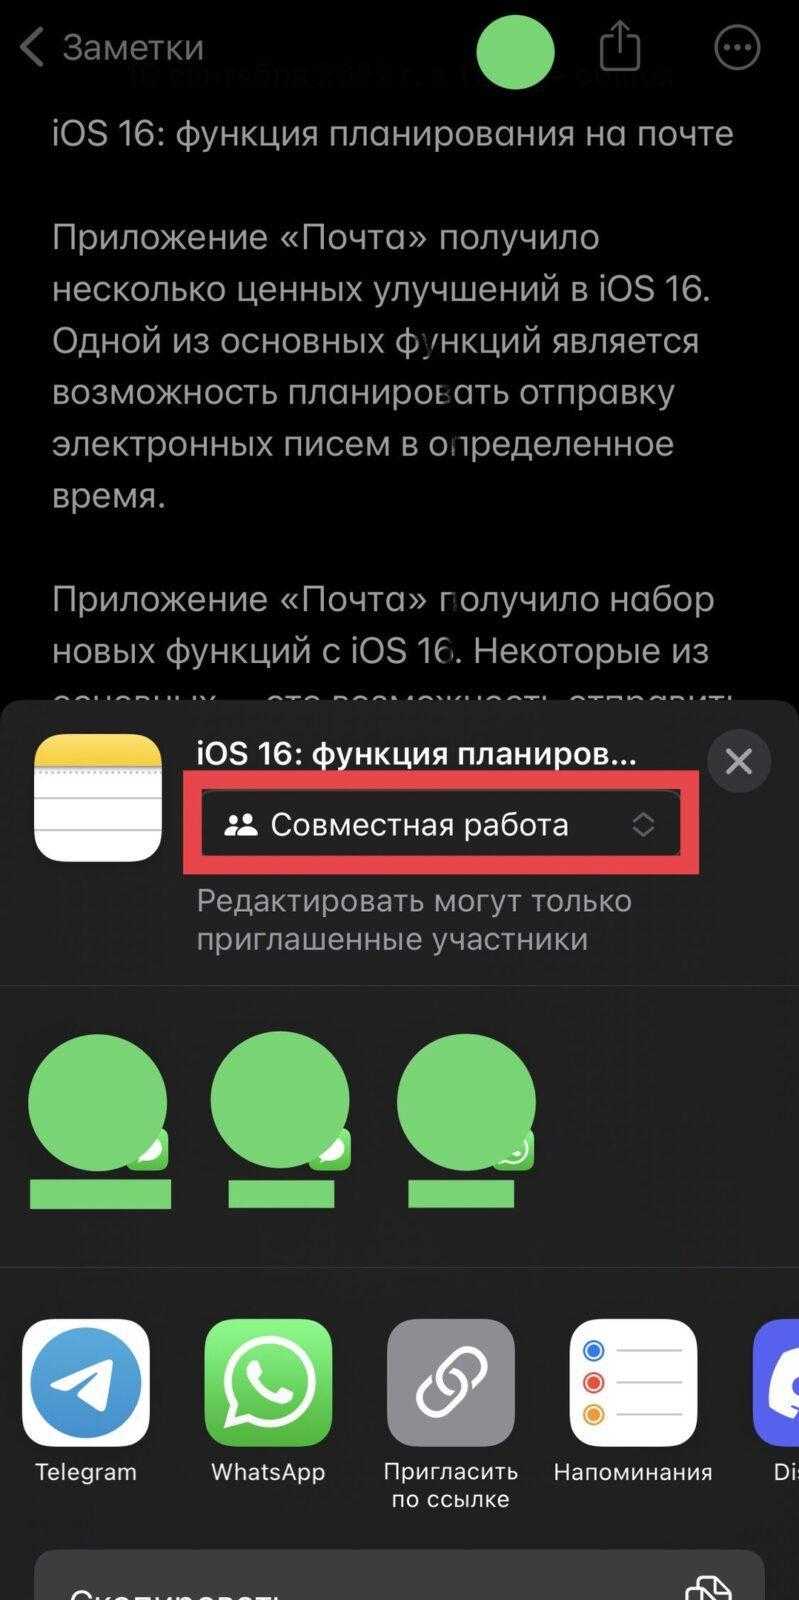 iOS 16: как использовать Совместную работу в iMessage (eZJx8gN9v34T3y3qJqmnQIPeUPmflqYjIhEMcKPpNJ9uJ869CmuiD0ZTNDNuEyP mb4wUQISz3PkctWuU5uhzSDa)